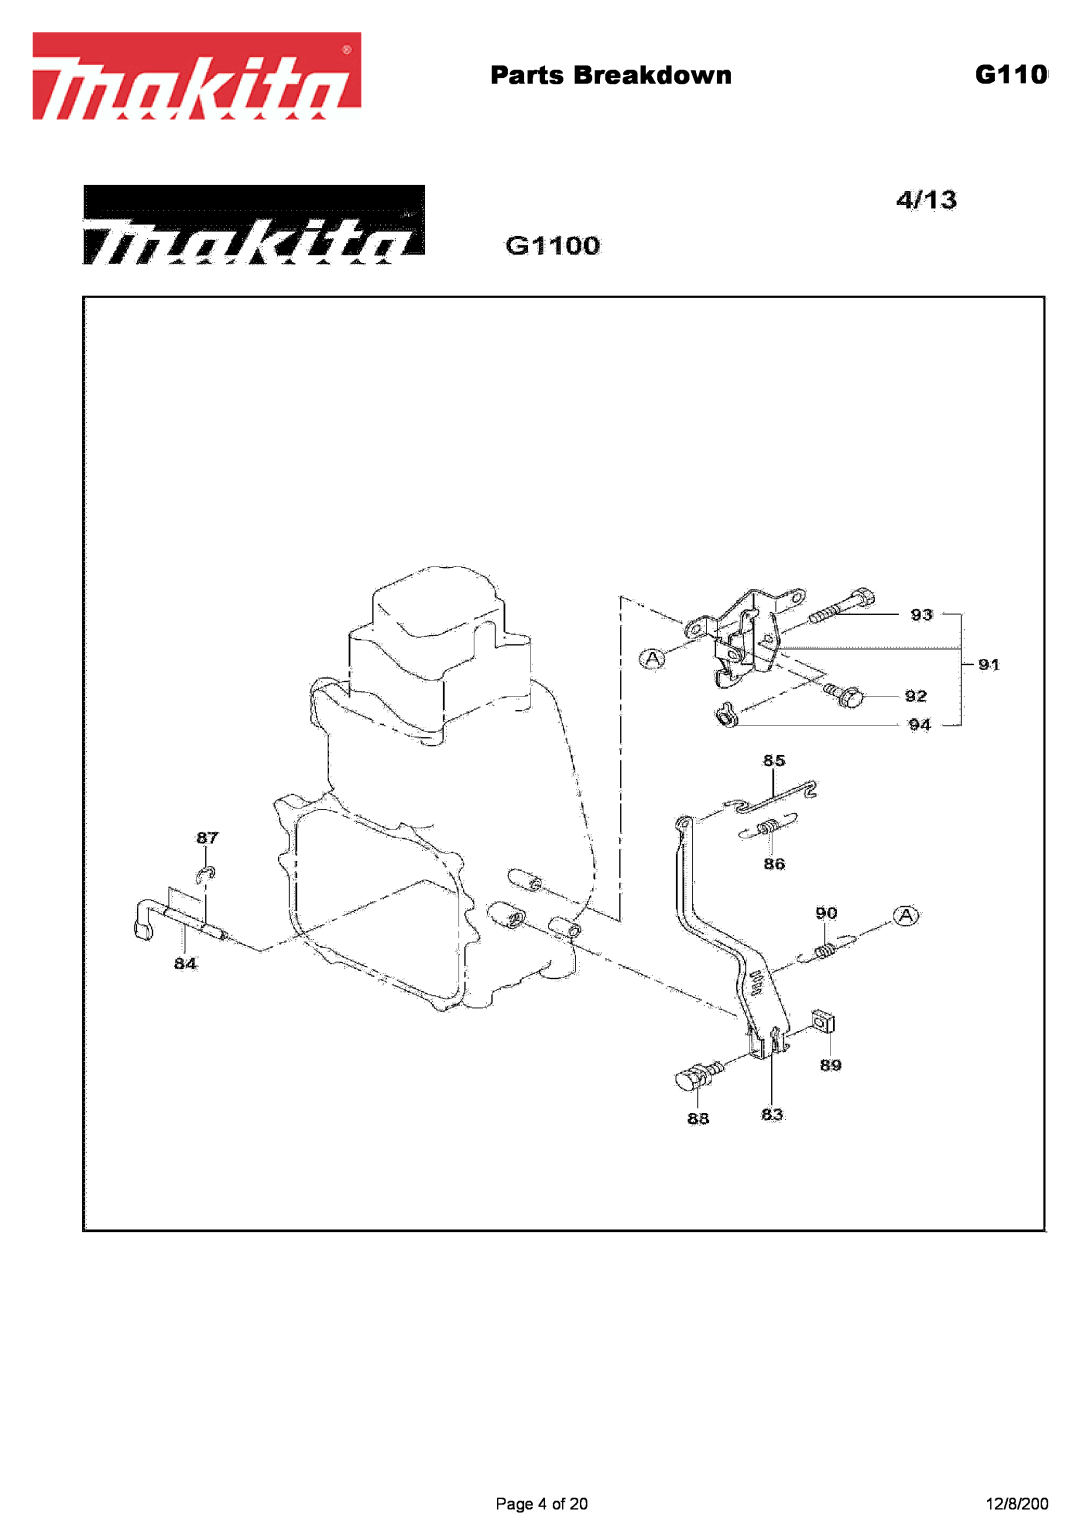 Makita G1700i manual Parts Breakdown, G110, Page 4 of, 12/8/200 